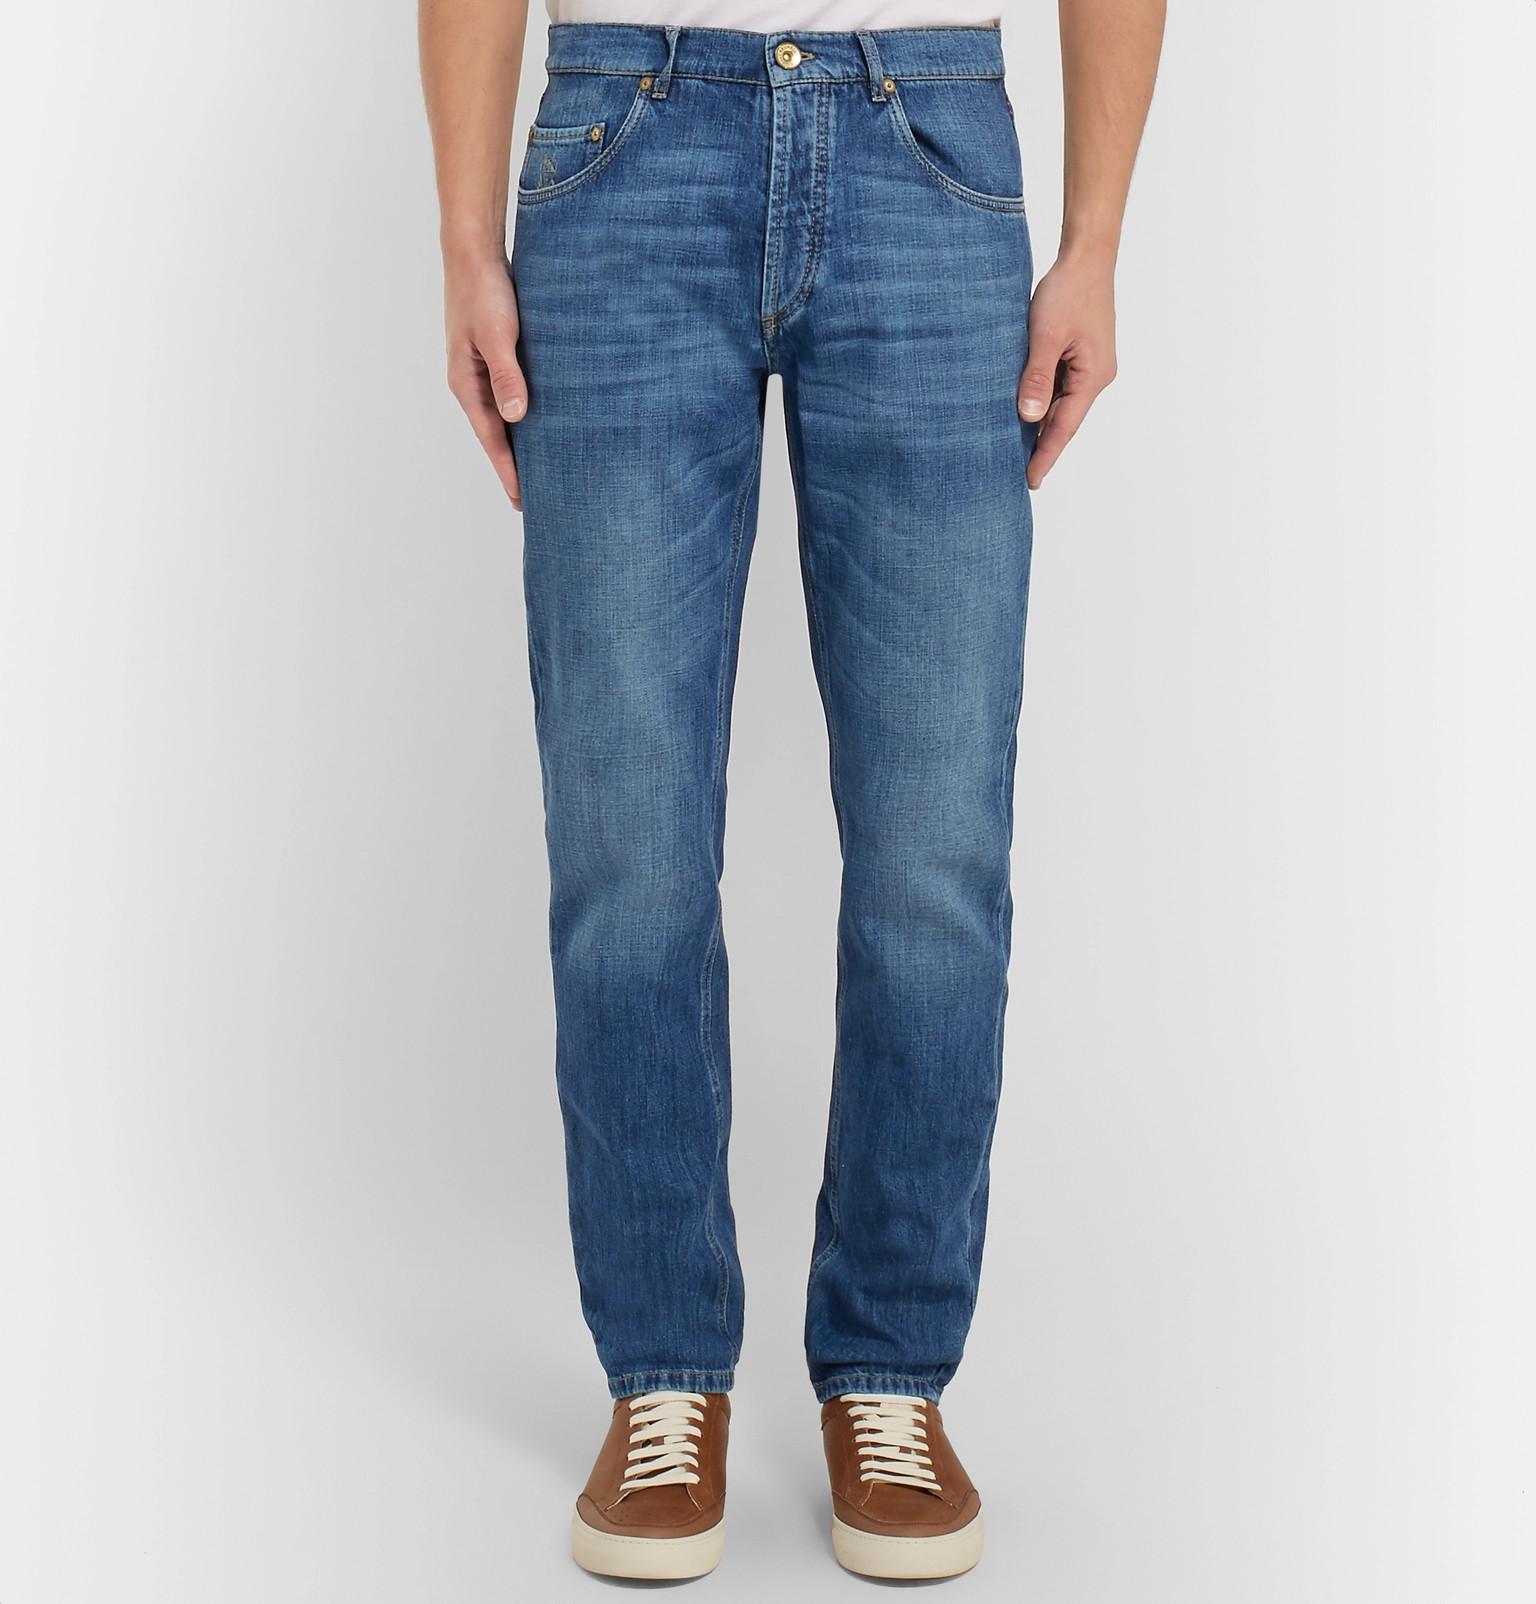 Brunello Cucinelli Slim-fit Denim Jeans in Indigo (Blue) for Men - Lyst